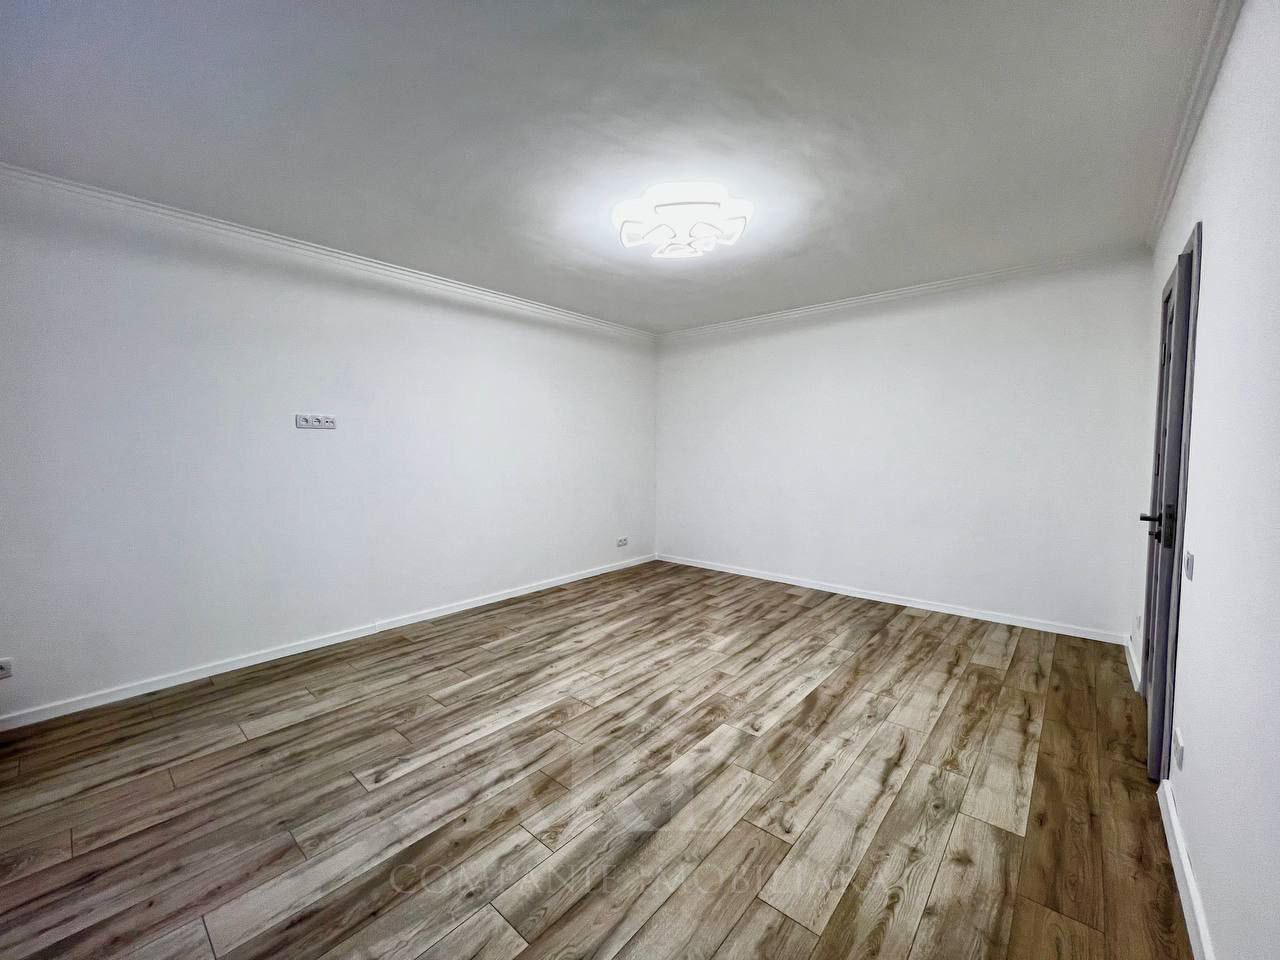 VÂNDUT Apartament de vânzare, Chișinău, sec. Ciocana, o odaie, reparat, 40m2, et.7